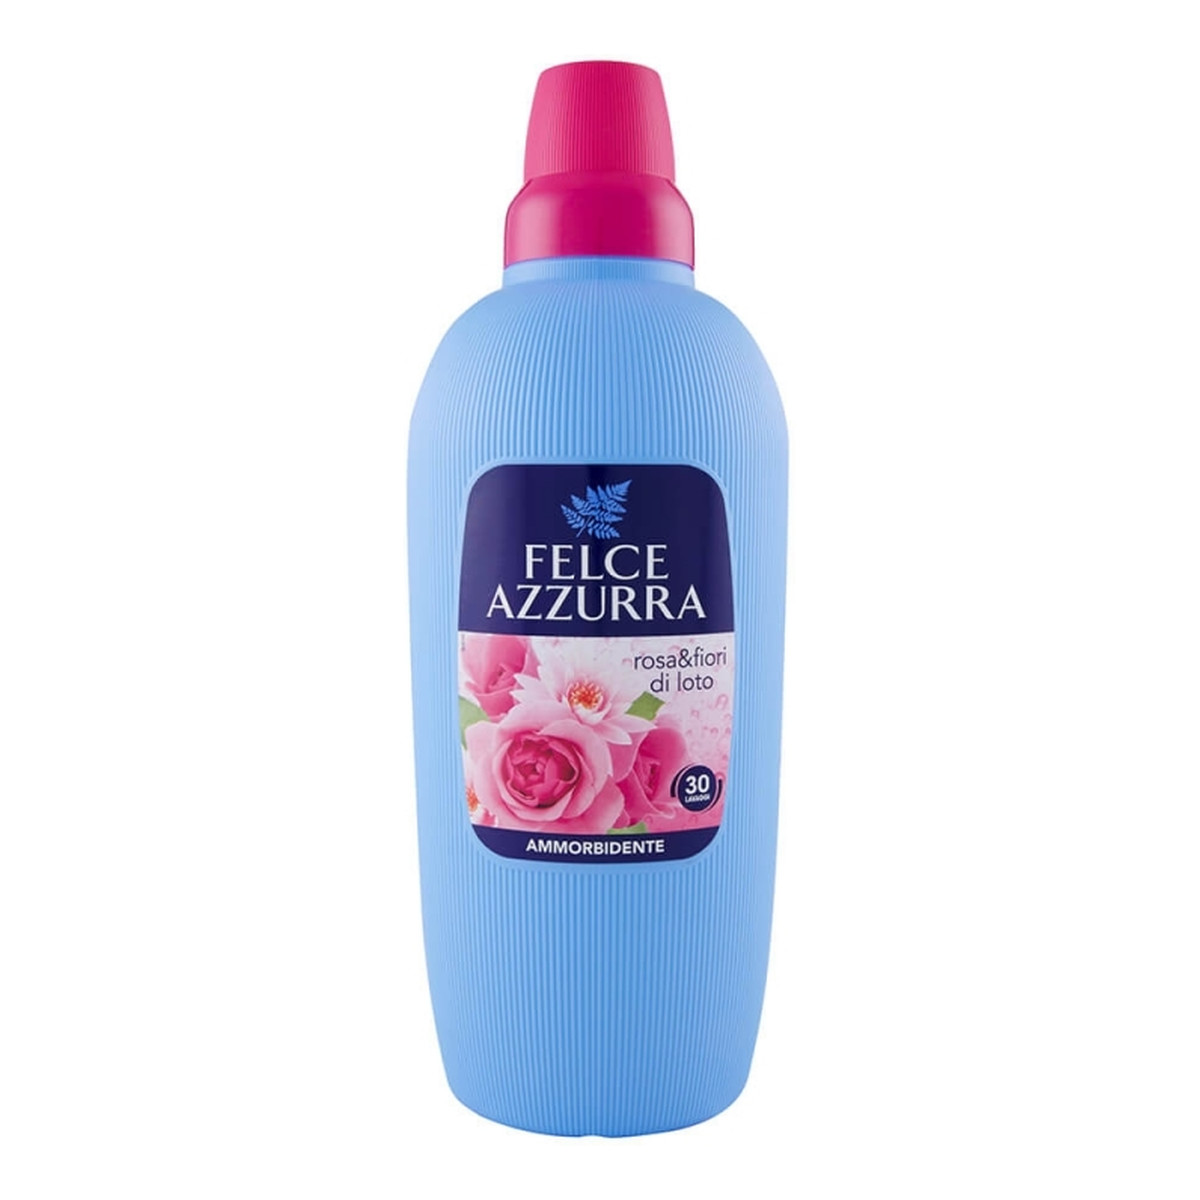 Felce Azzurra Rose & Lotus Flower Płyn do płukania 30 prań 2000ml